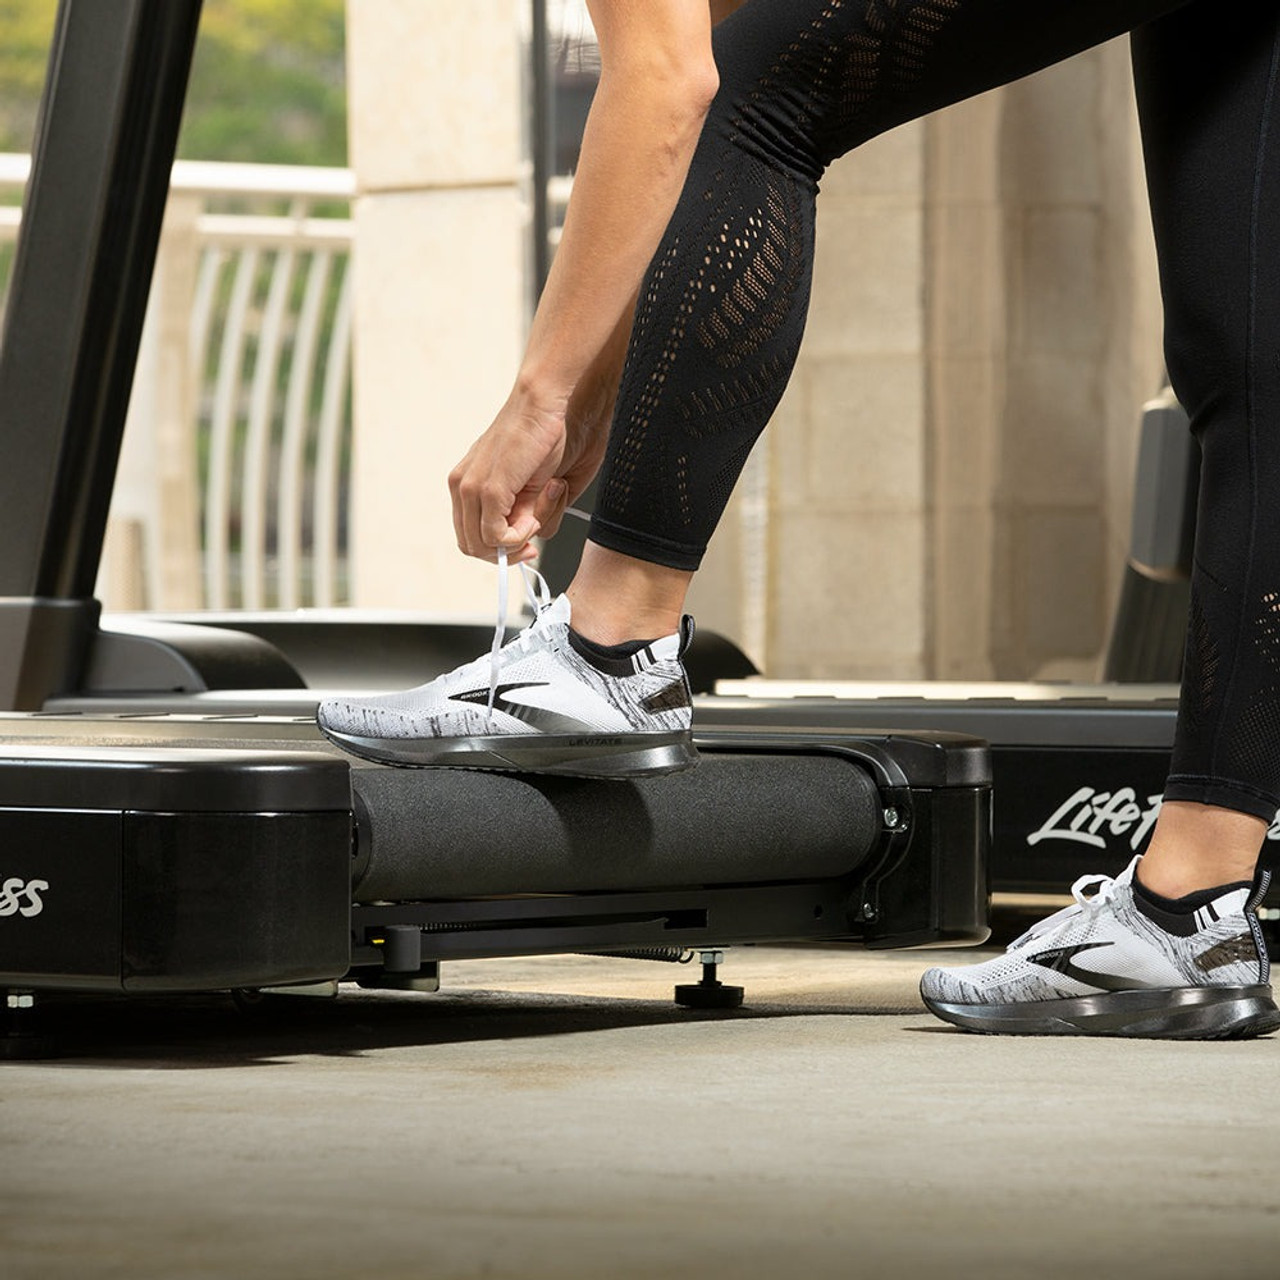 Shop the Life Fitness Club Series+ Treadmill